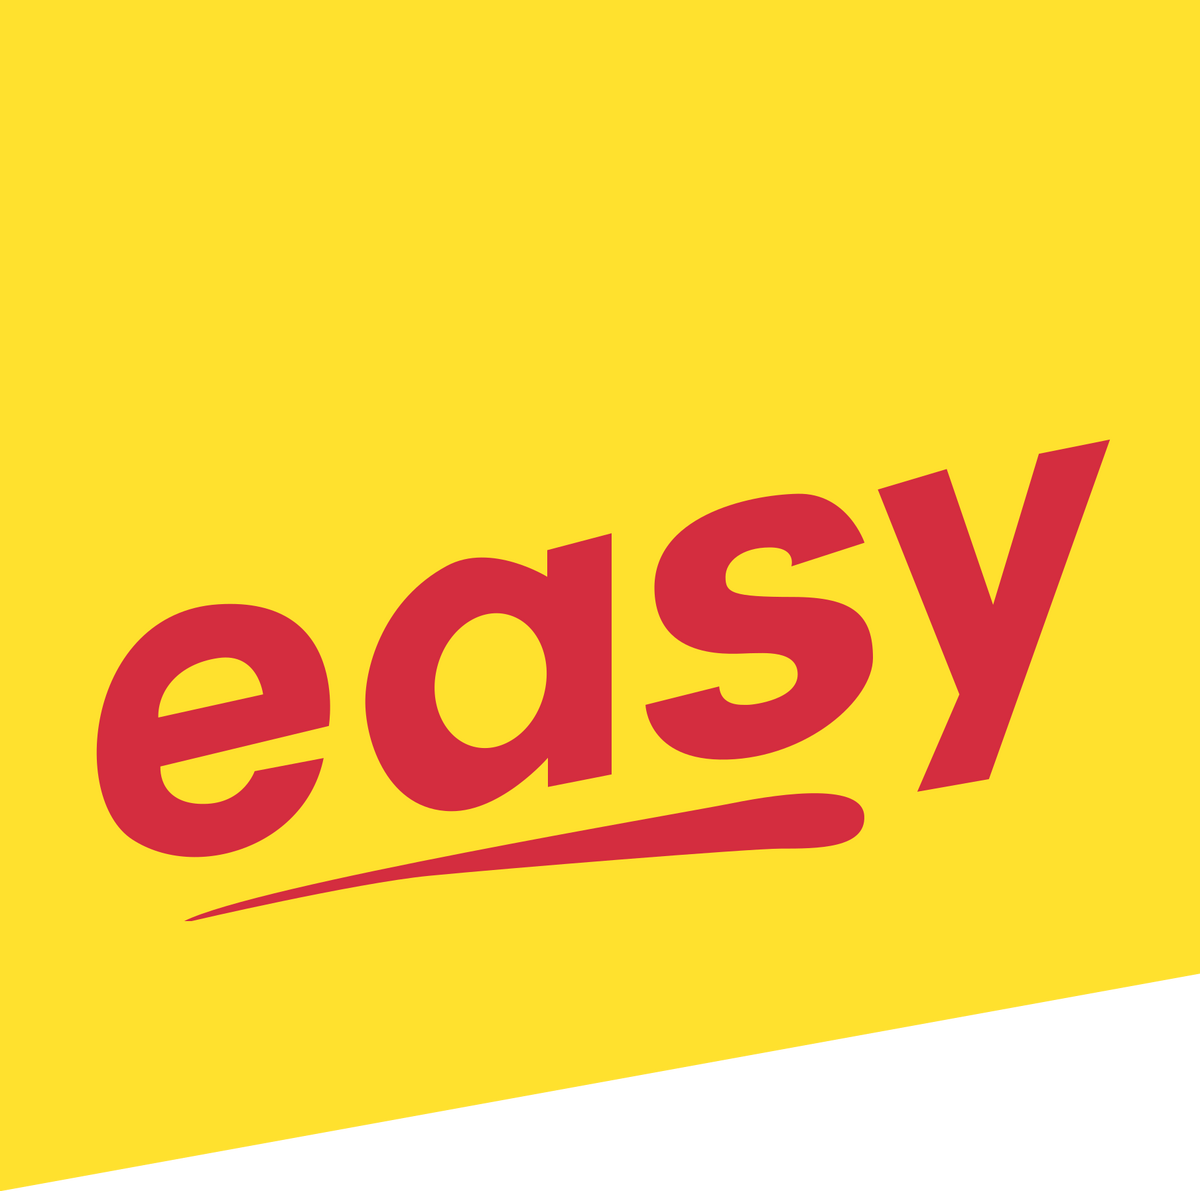 Easy easily. Easy vector. Easing логотип. Easy sell фото логотипа. Easy separate логотип.